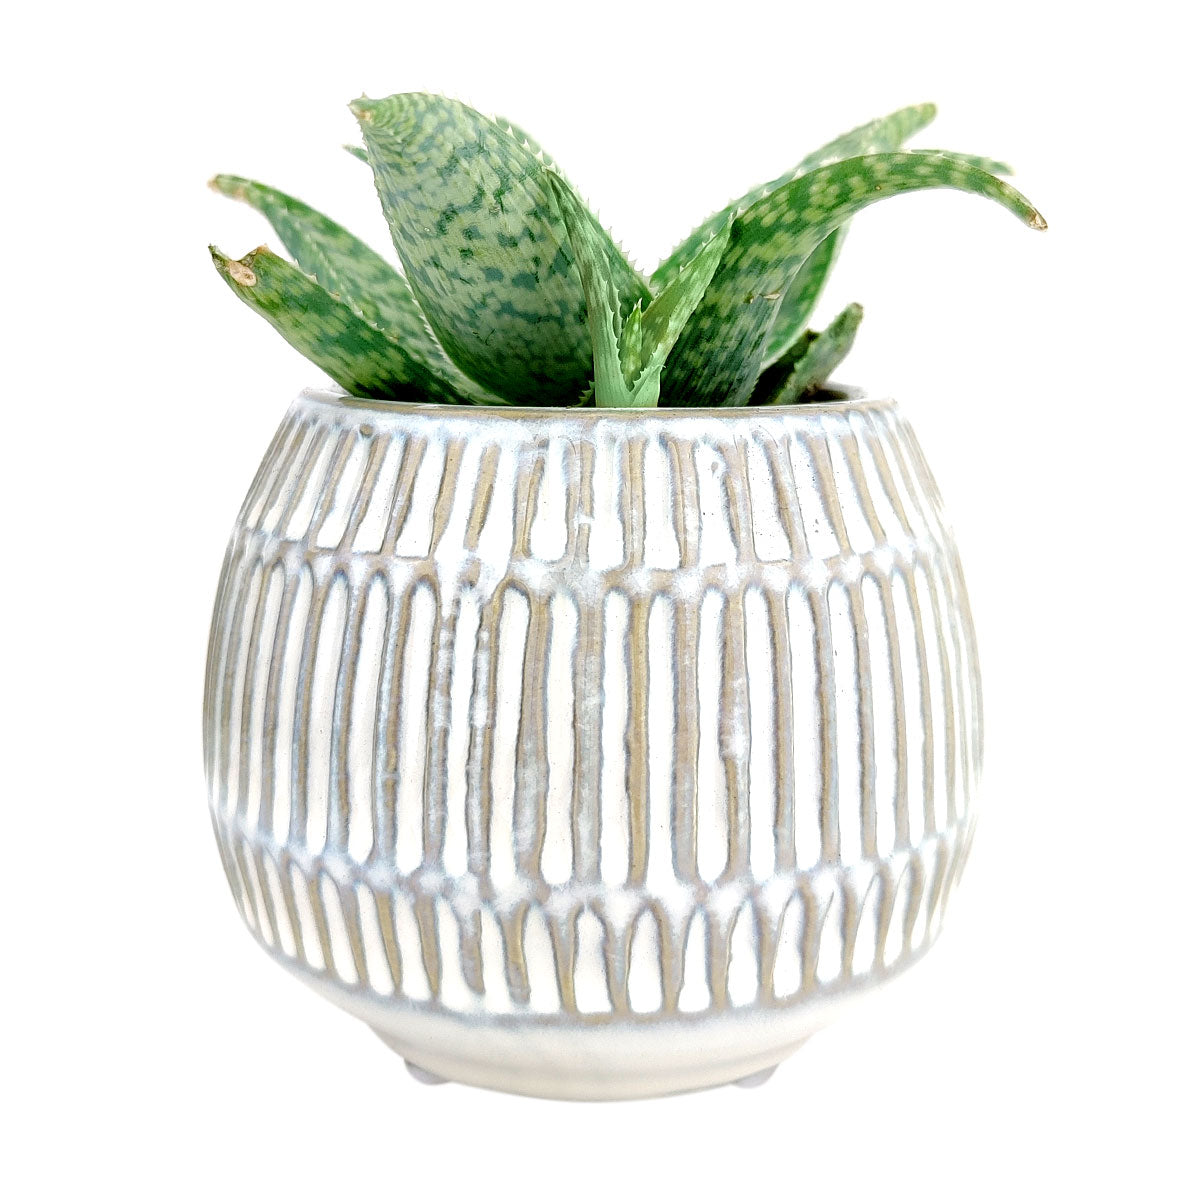 Round Texture Cream Pot for sale, White Ceramic Textured Planter Pot, Small ceramic pot for succulents and cacti, succulent home office decor ideas